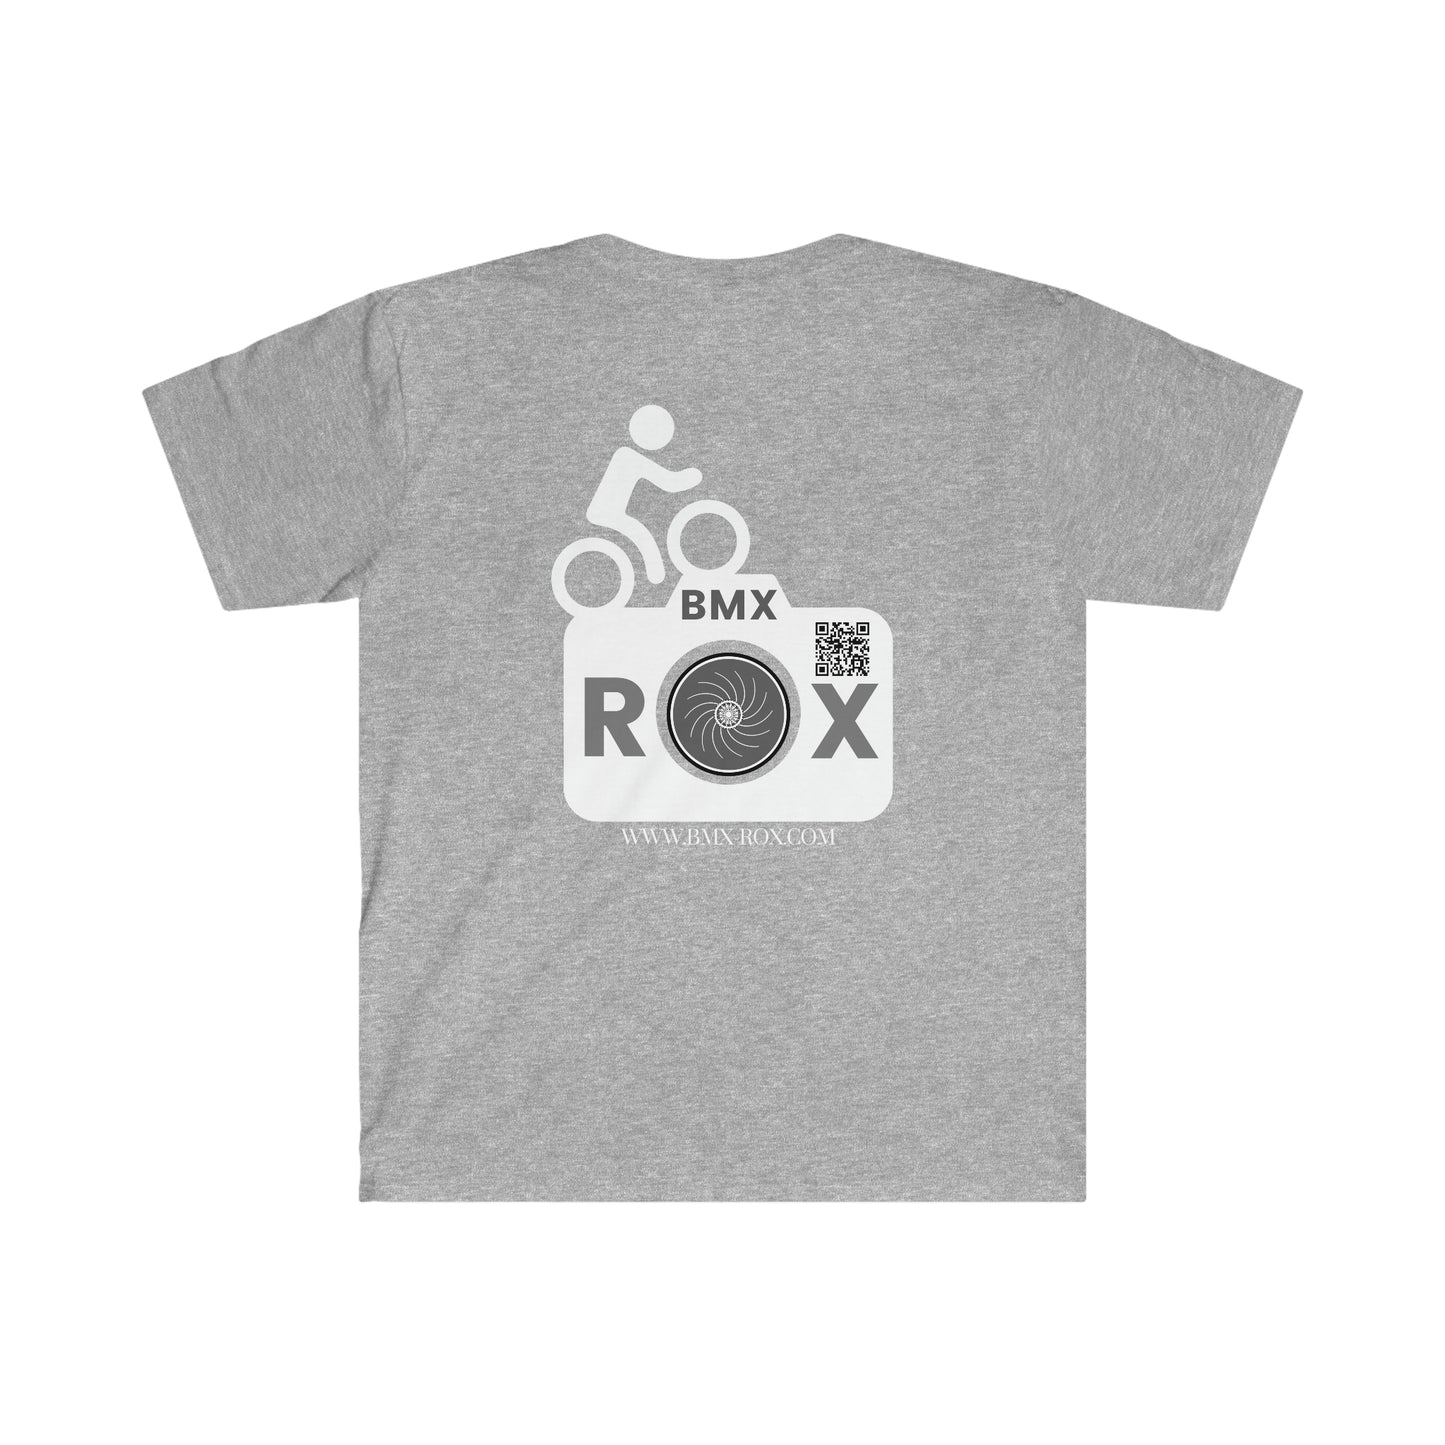 BMX ROX Softstyle T-Shirt